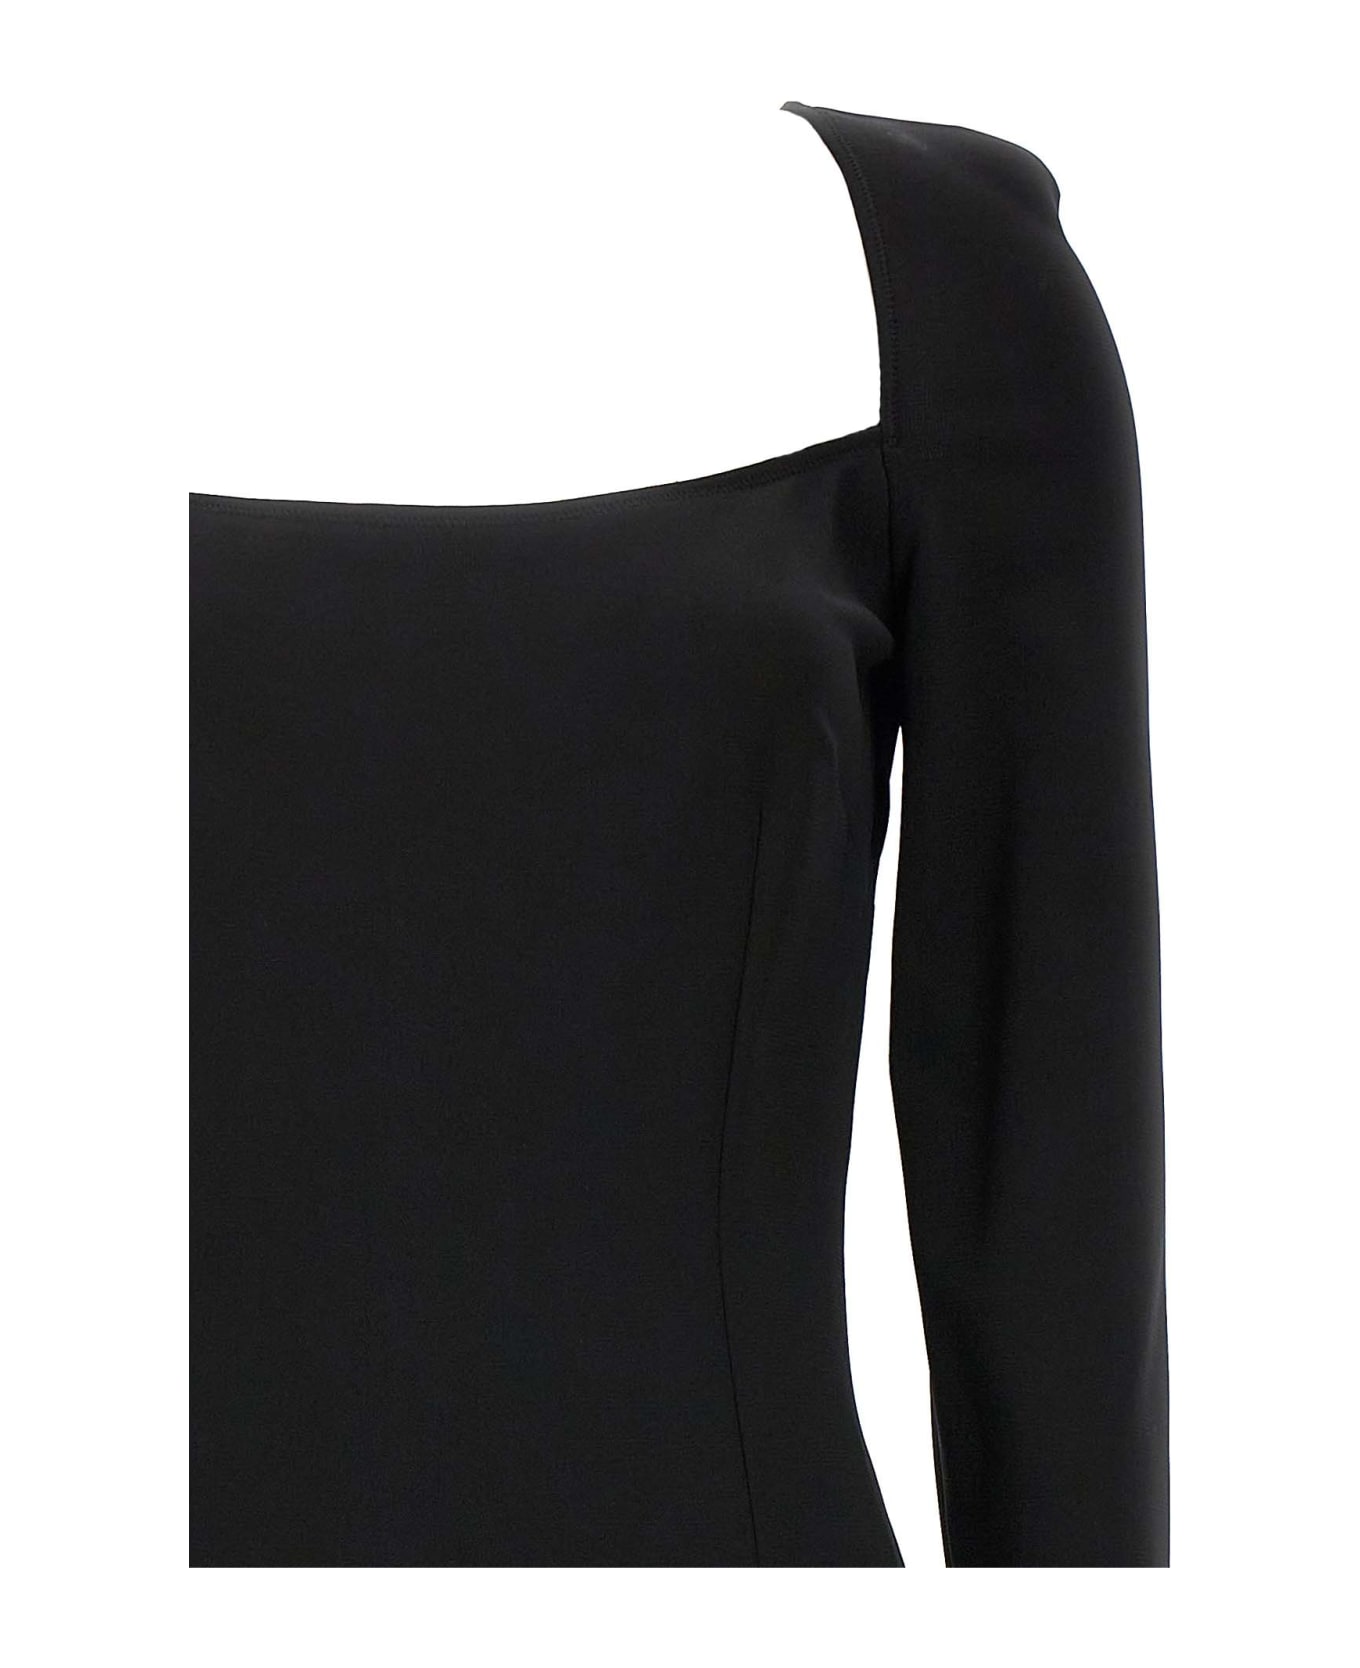 Dolce & Gabbana Milan Stitch Dress - Black ワンピース＆ドレス